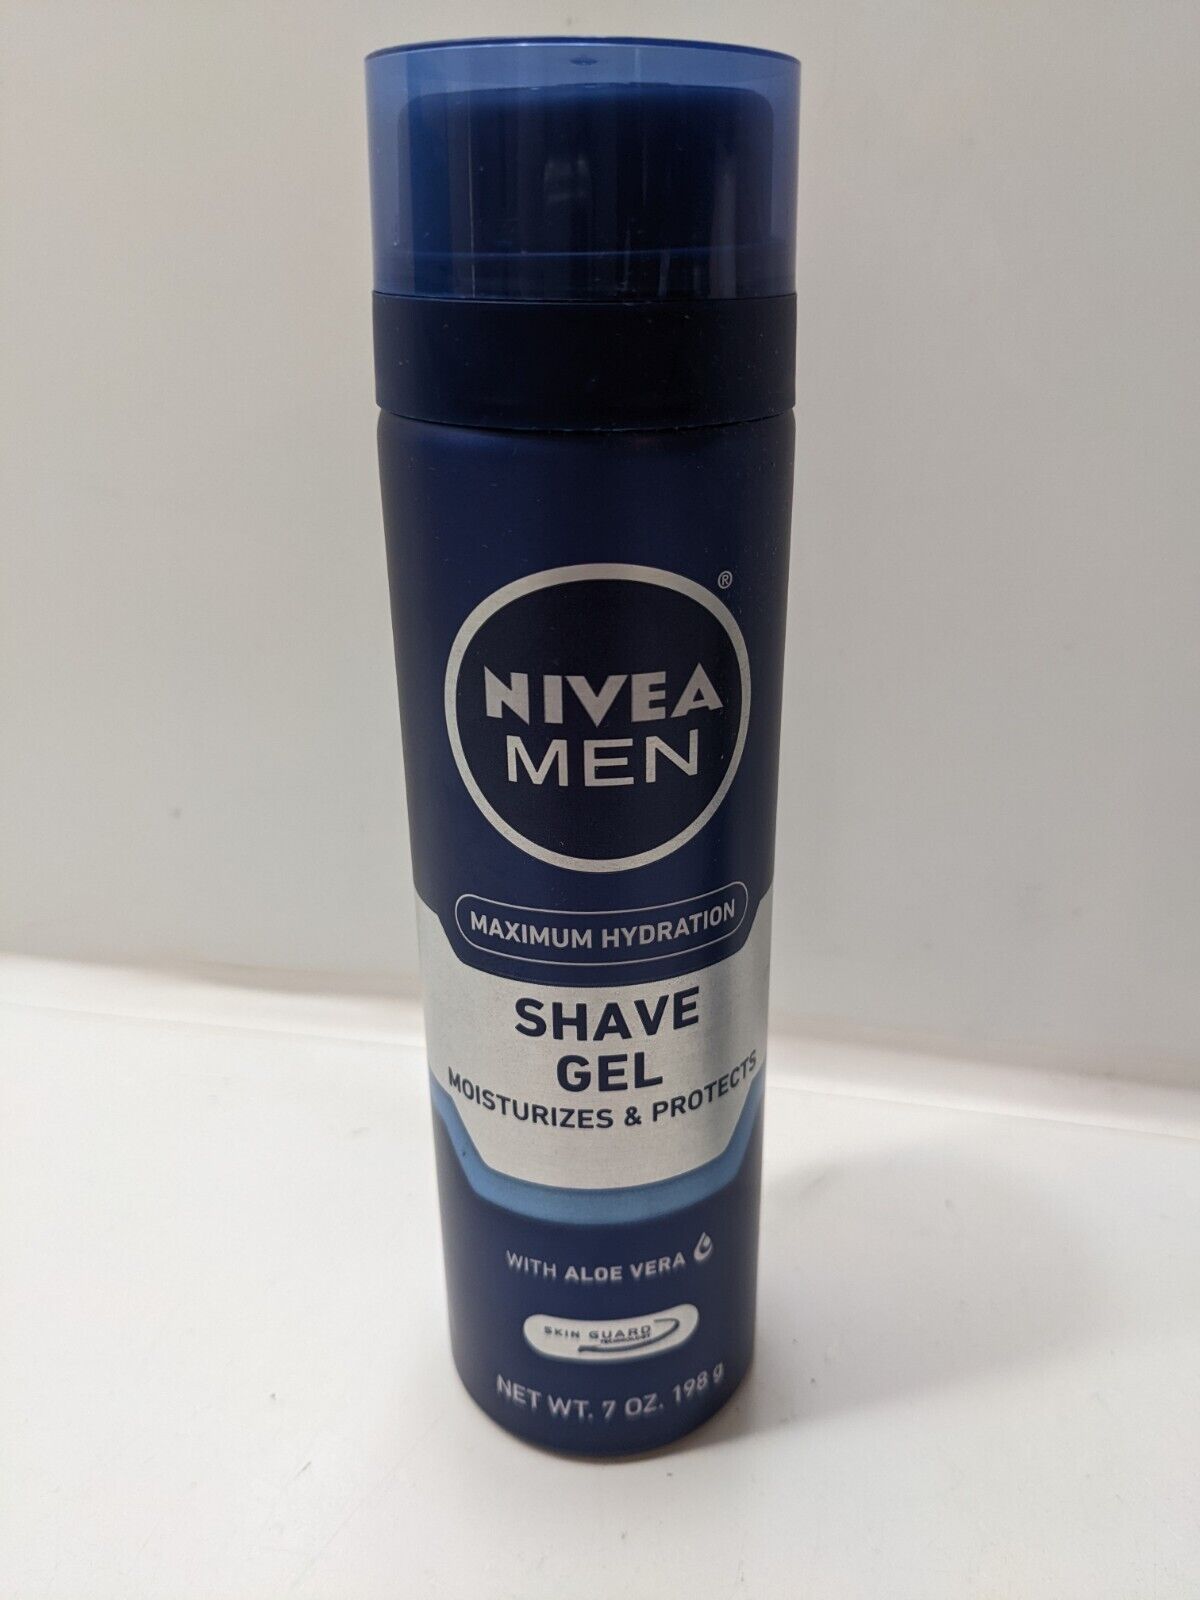 NIVEA MEN Sensitive Shave Set (3 pieces)